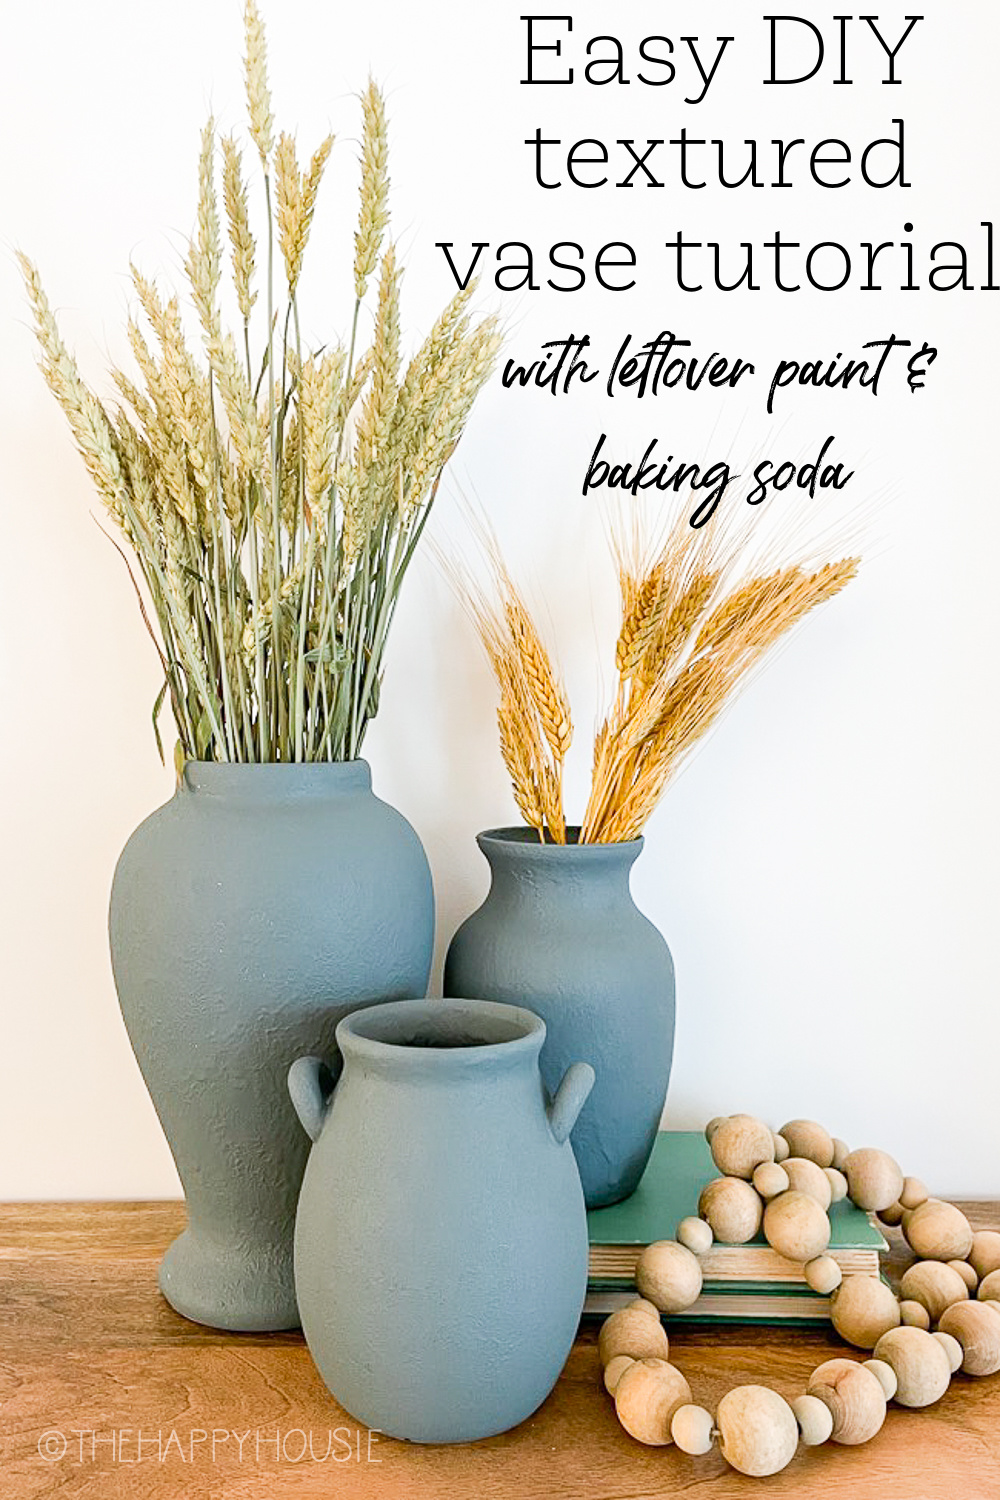 Easy DIY Textured Vase Tutorial graphic.